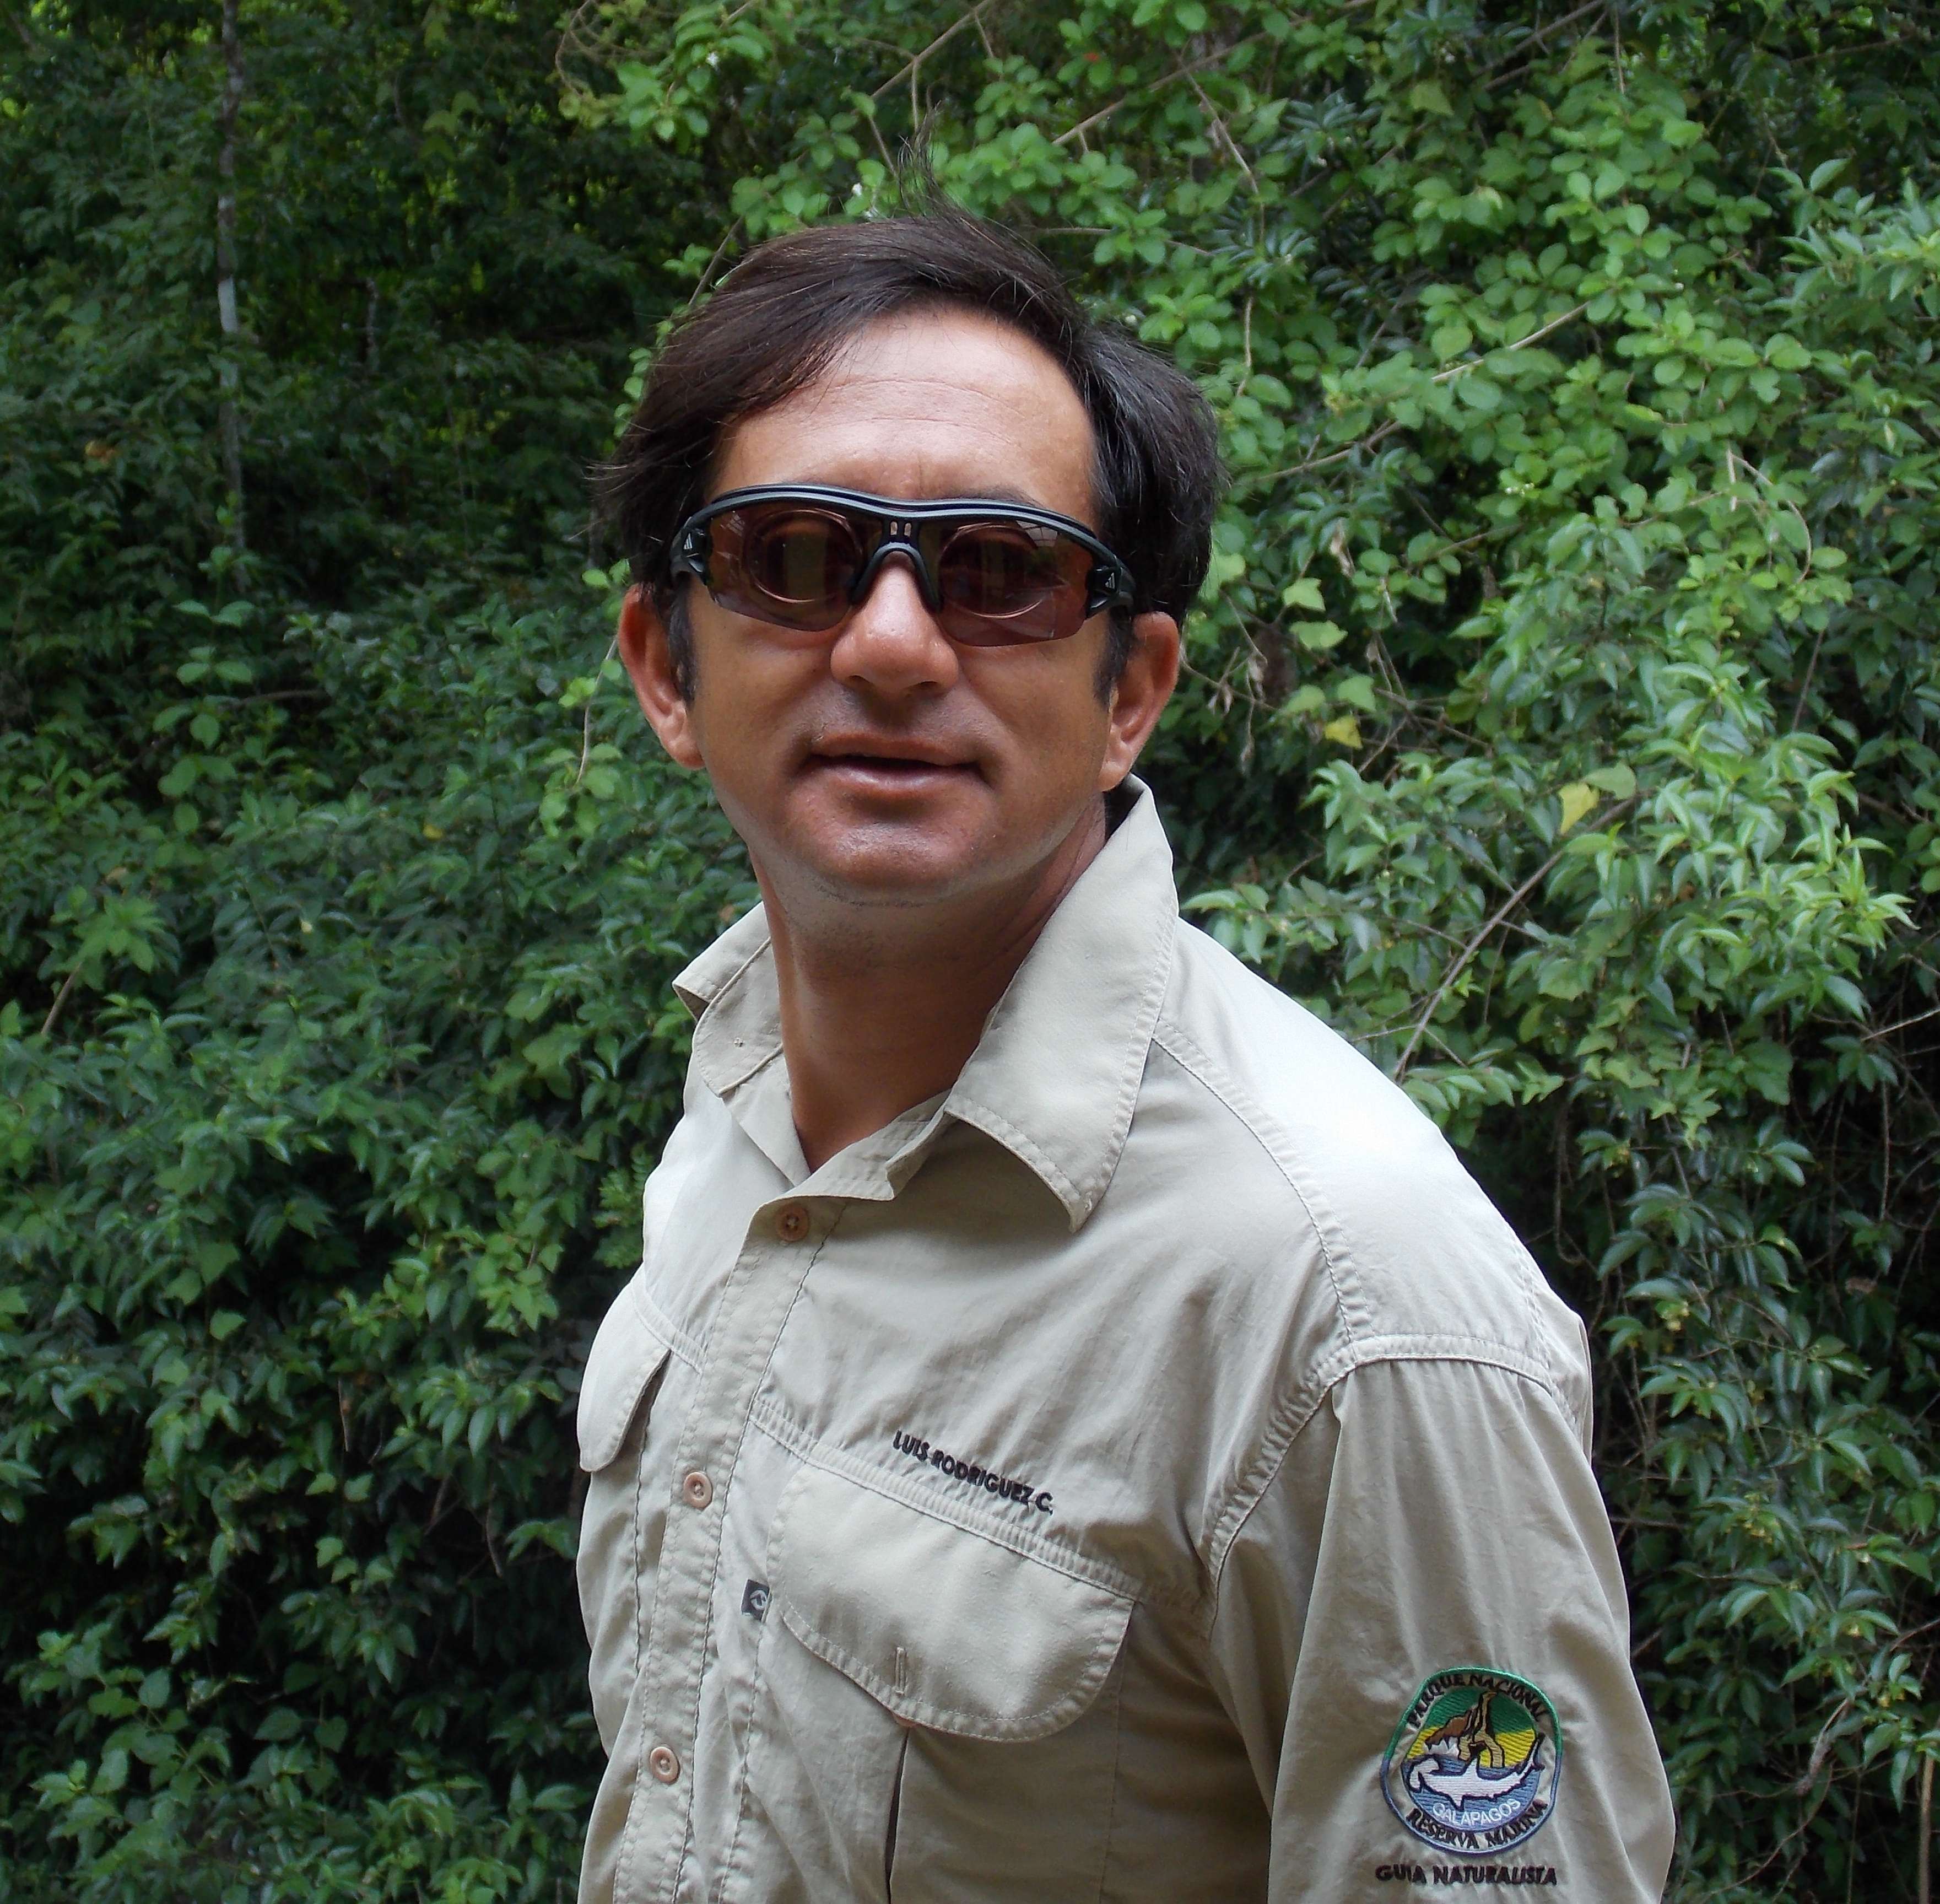 Luis Rodriguez, Galapagos guide